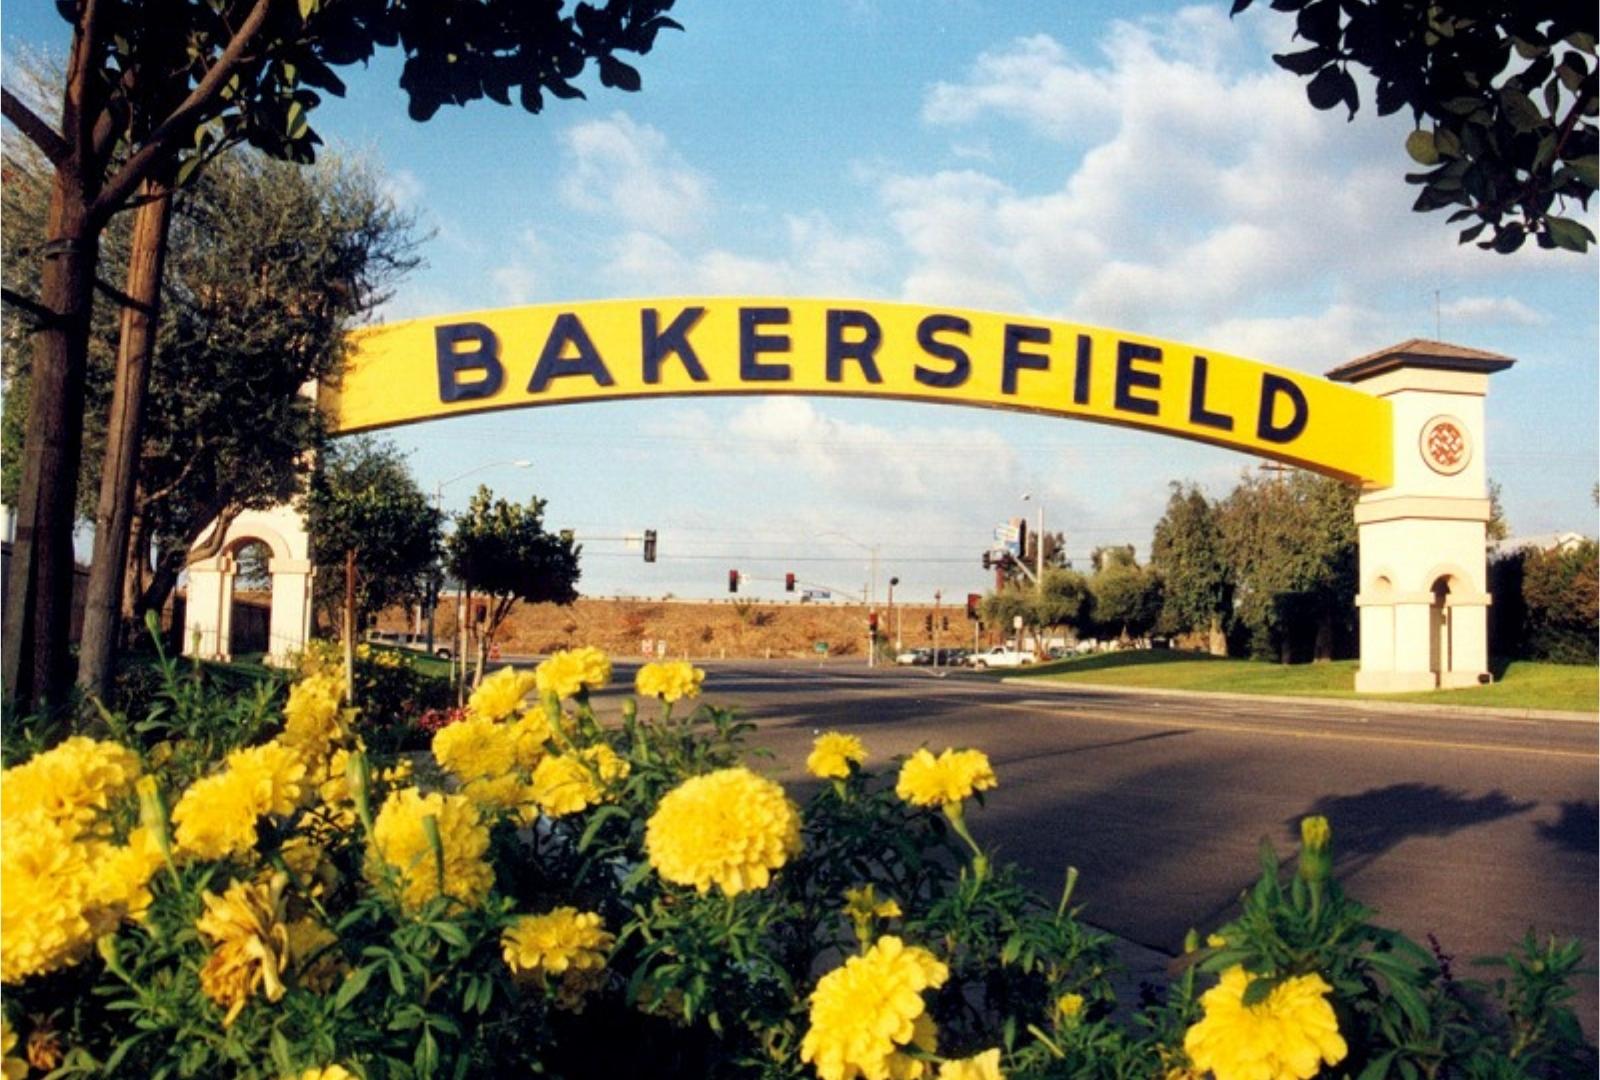 Bakersfield Arch